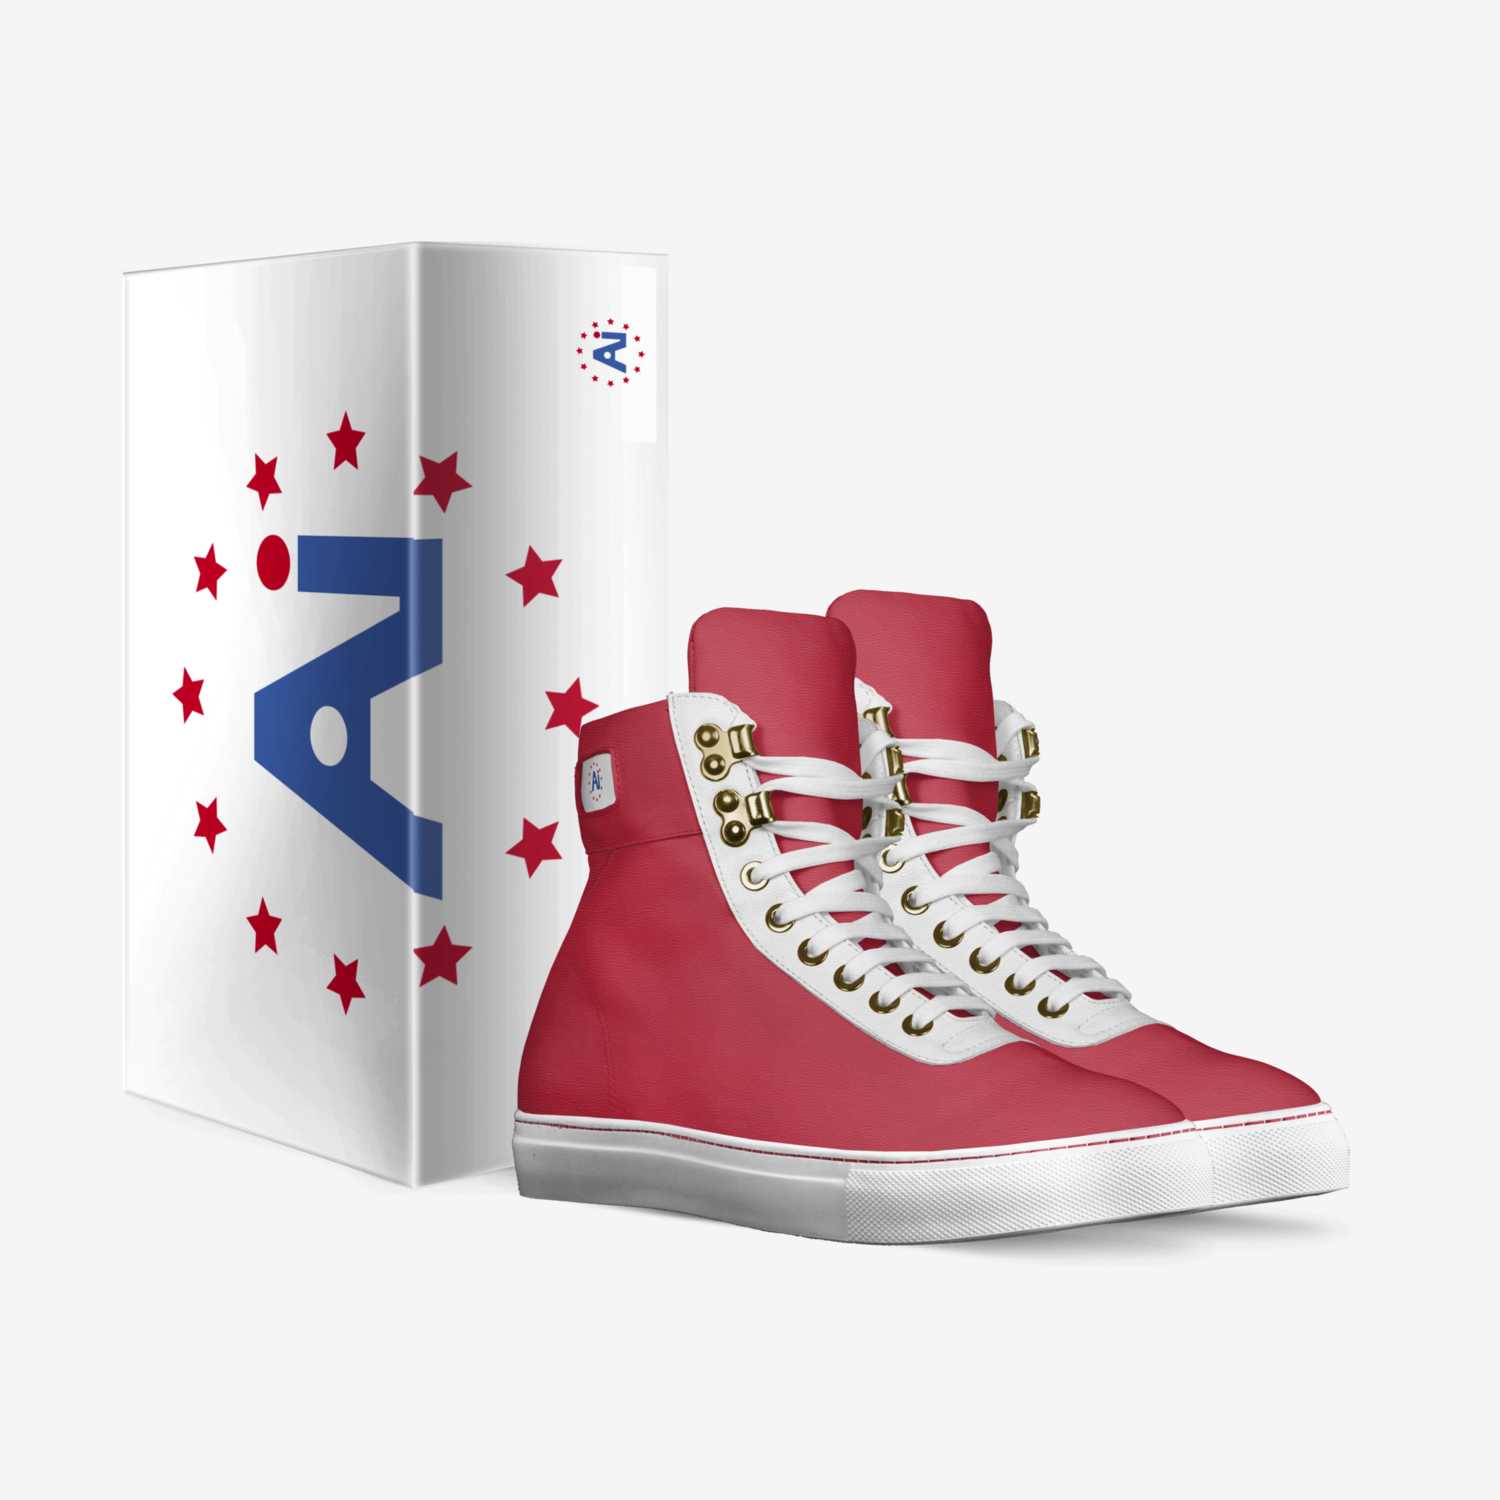 A.I. FRENZYS custom made in Italy shoes by Billboardfreshington | Box view